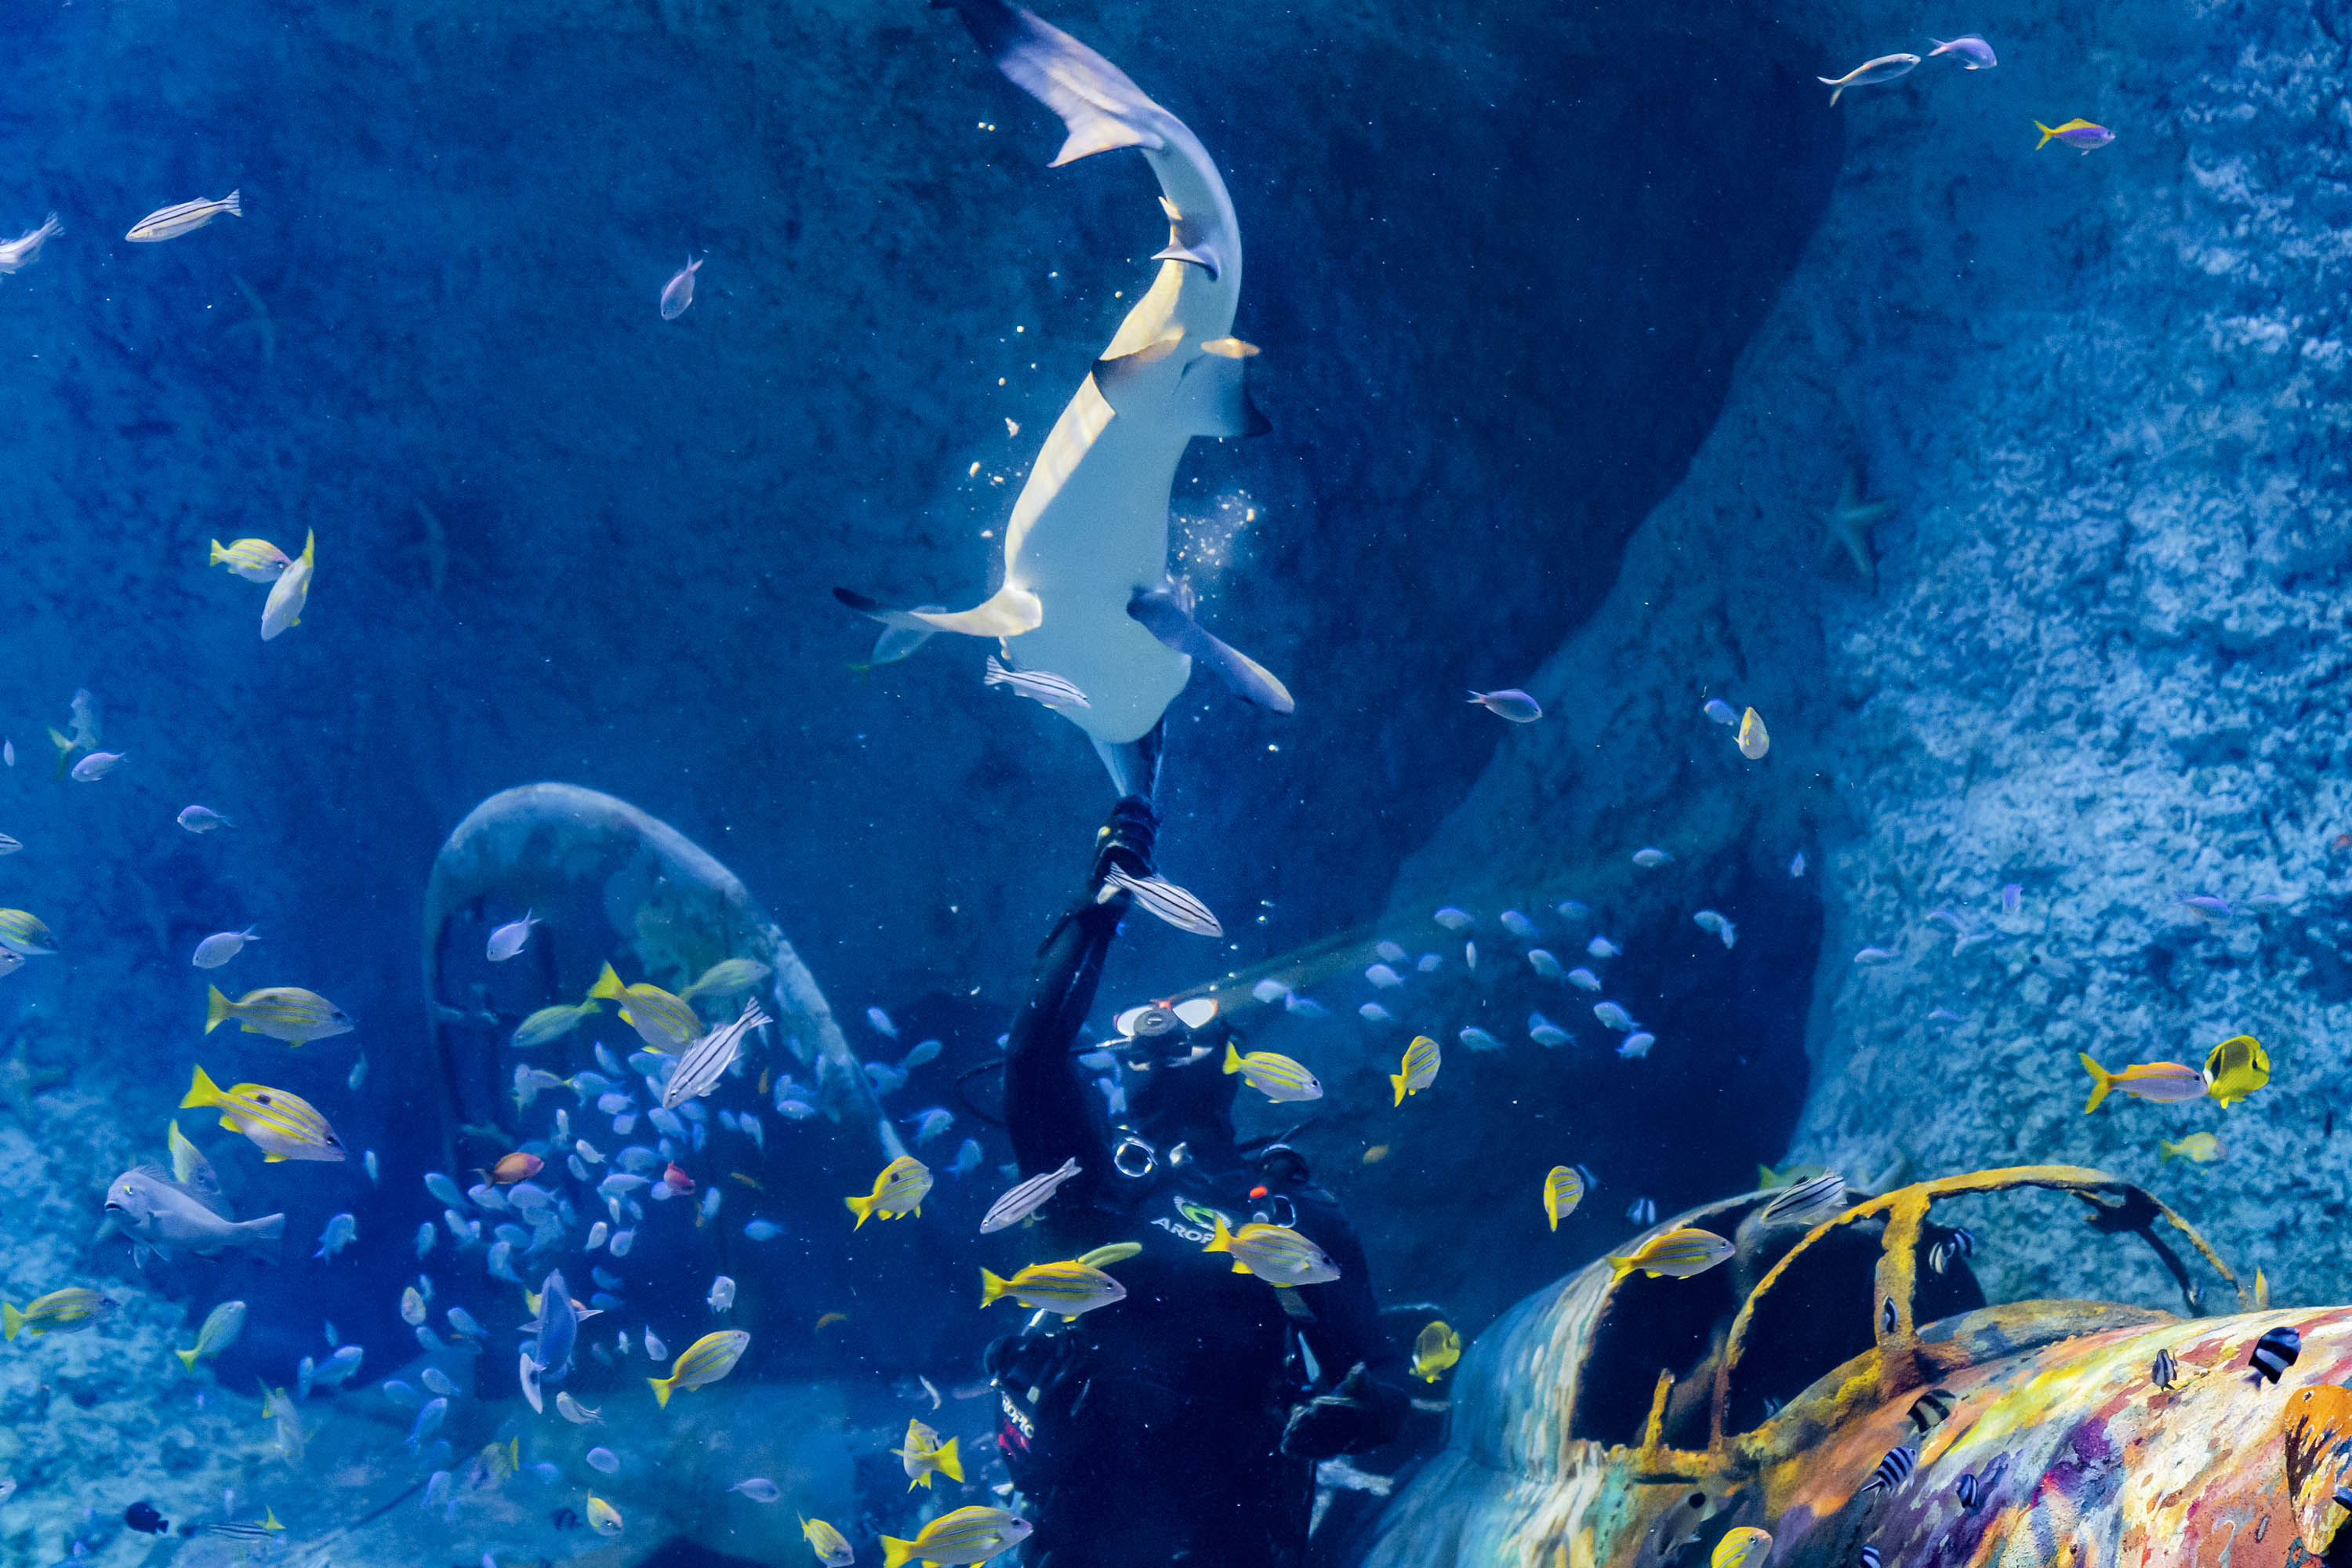 Scuba diver feeding sharks and rays at the National Aquarium